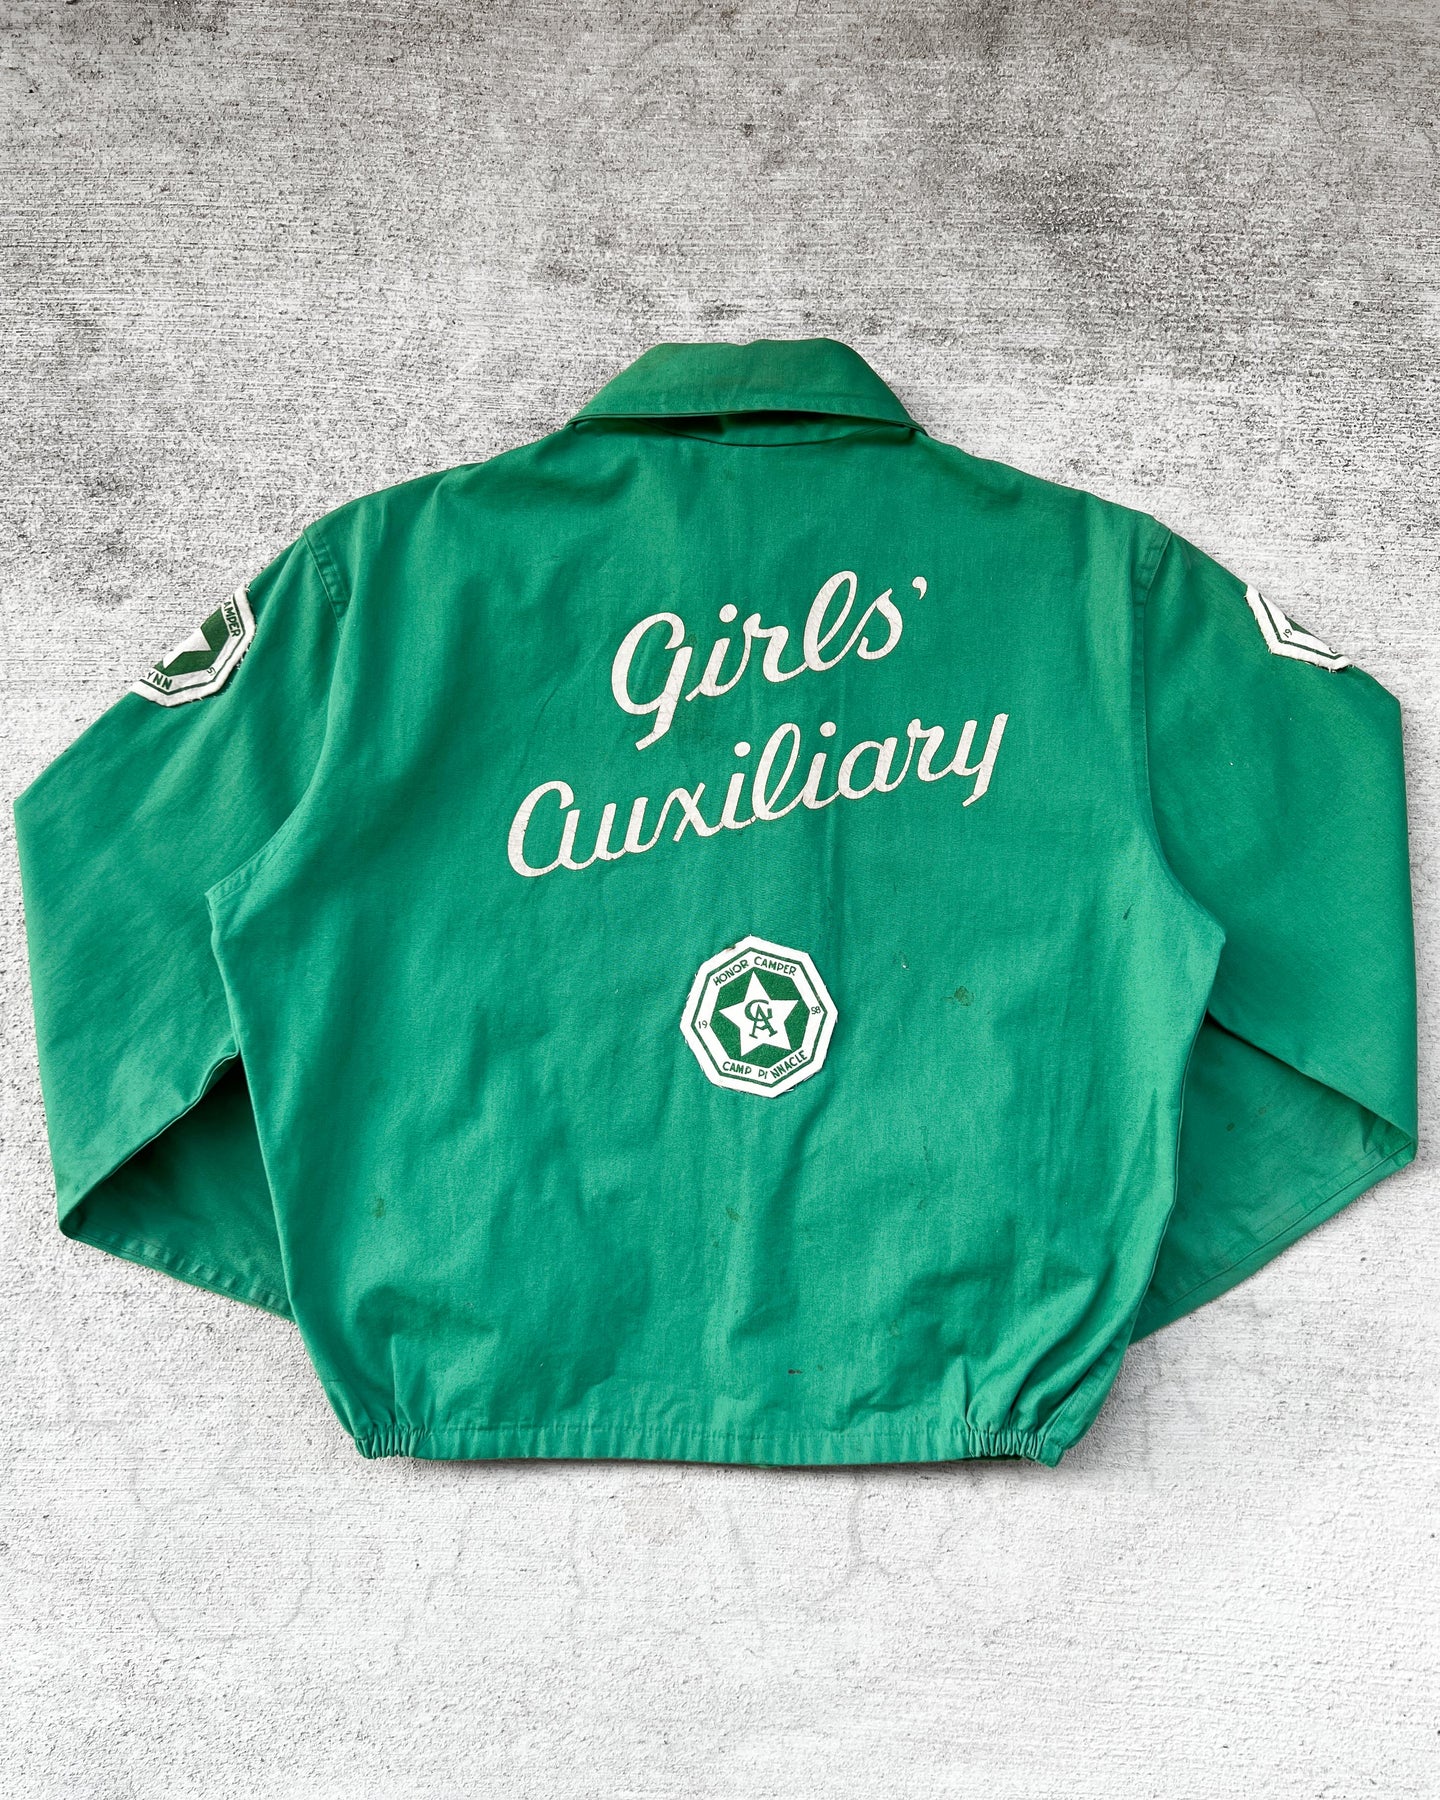 1950s Girl Scout Camper Jacket - Size Medium